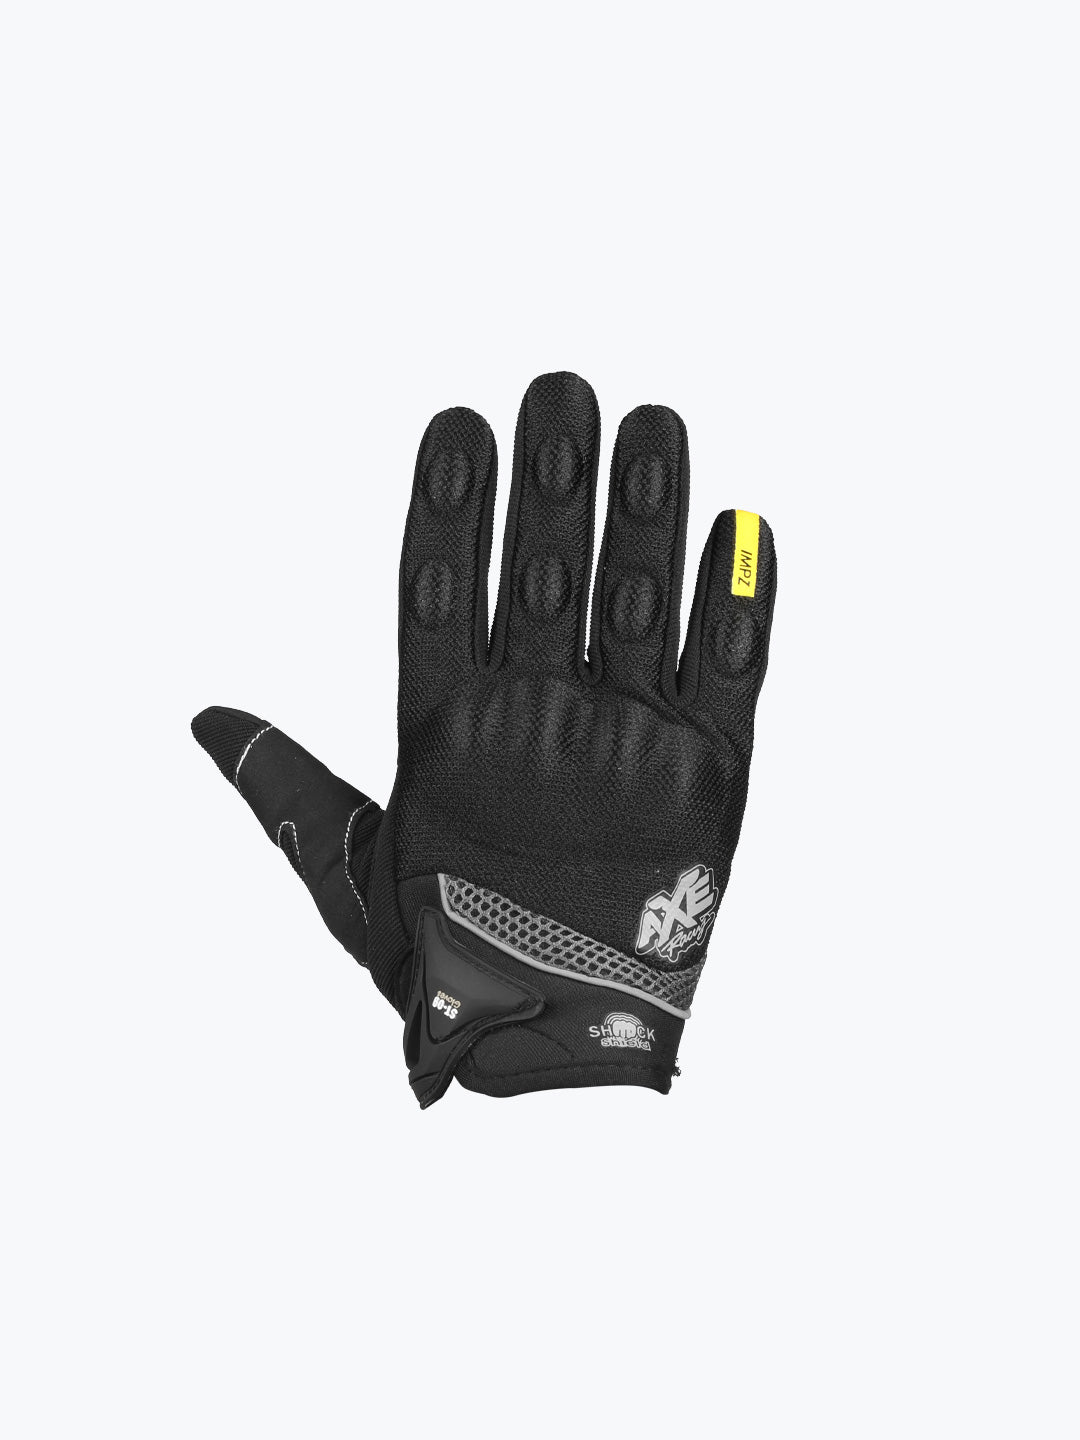 AXE Racing Gloves St09 Black